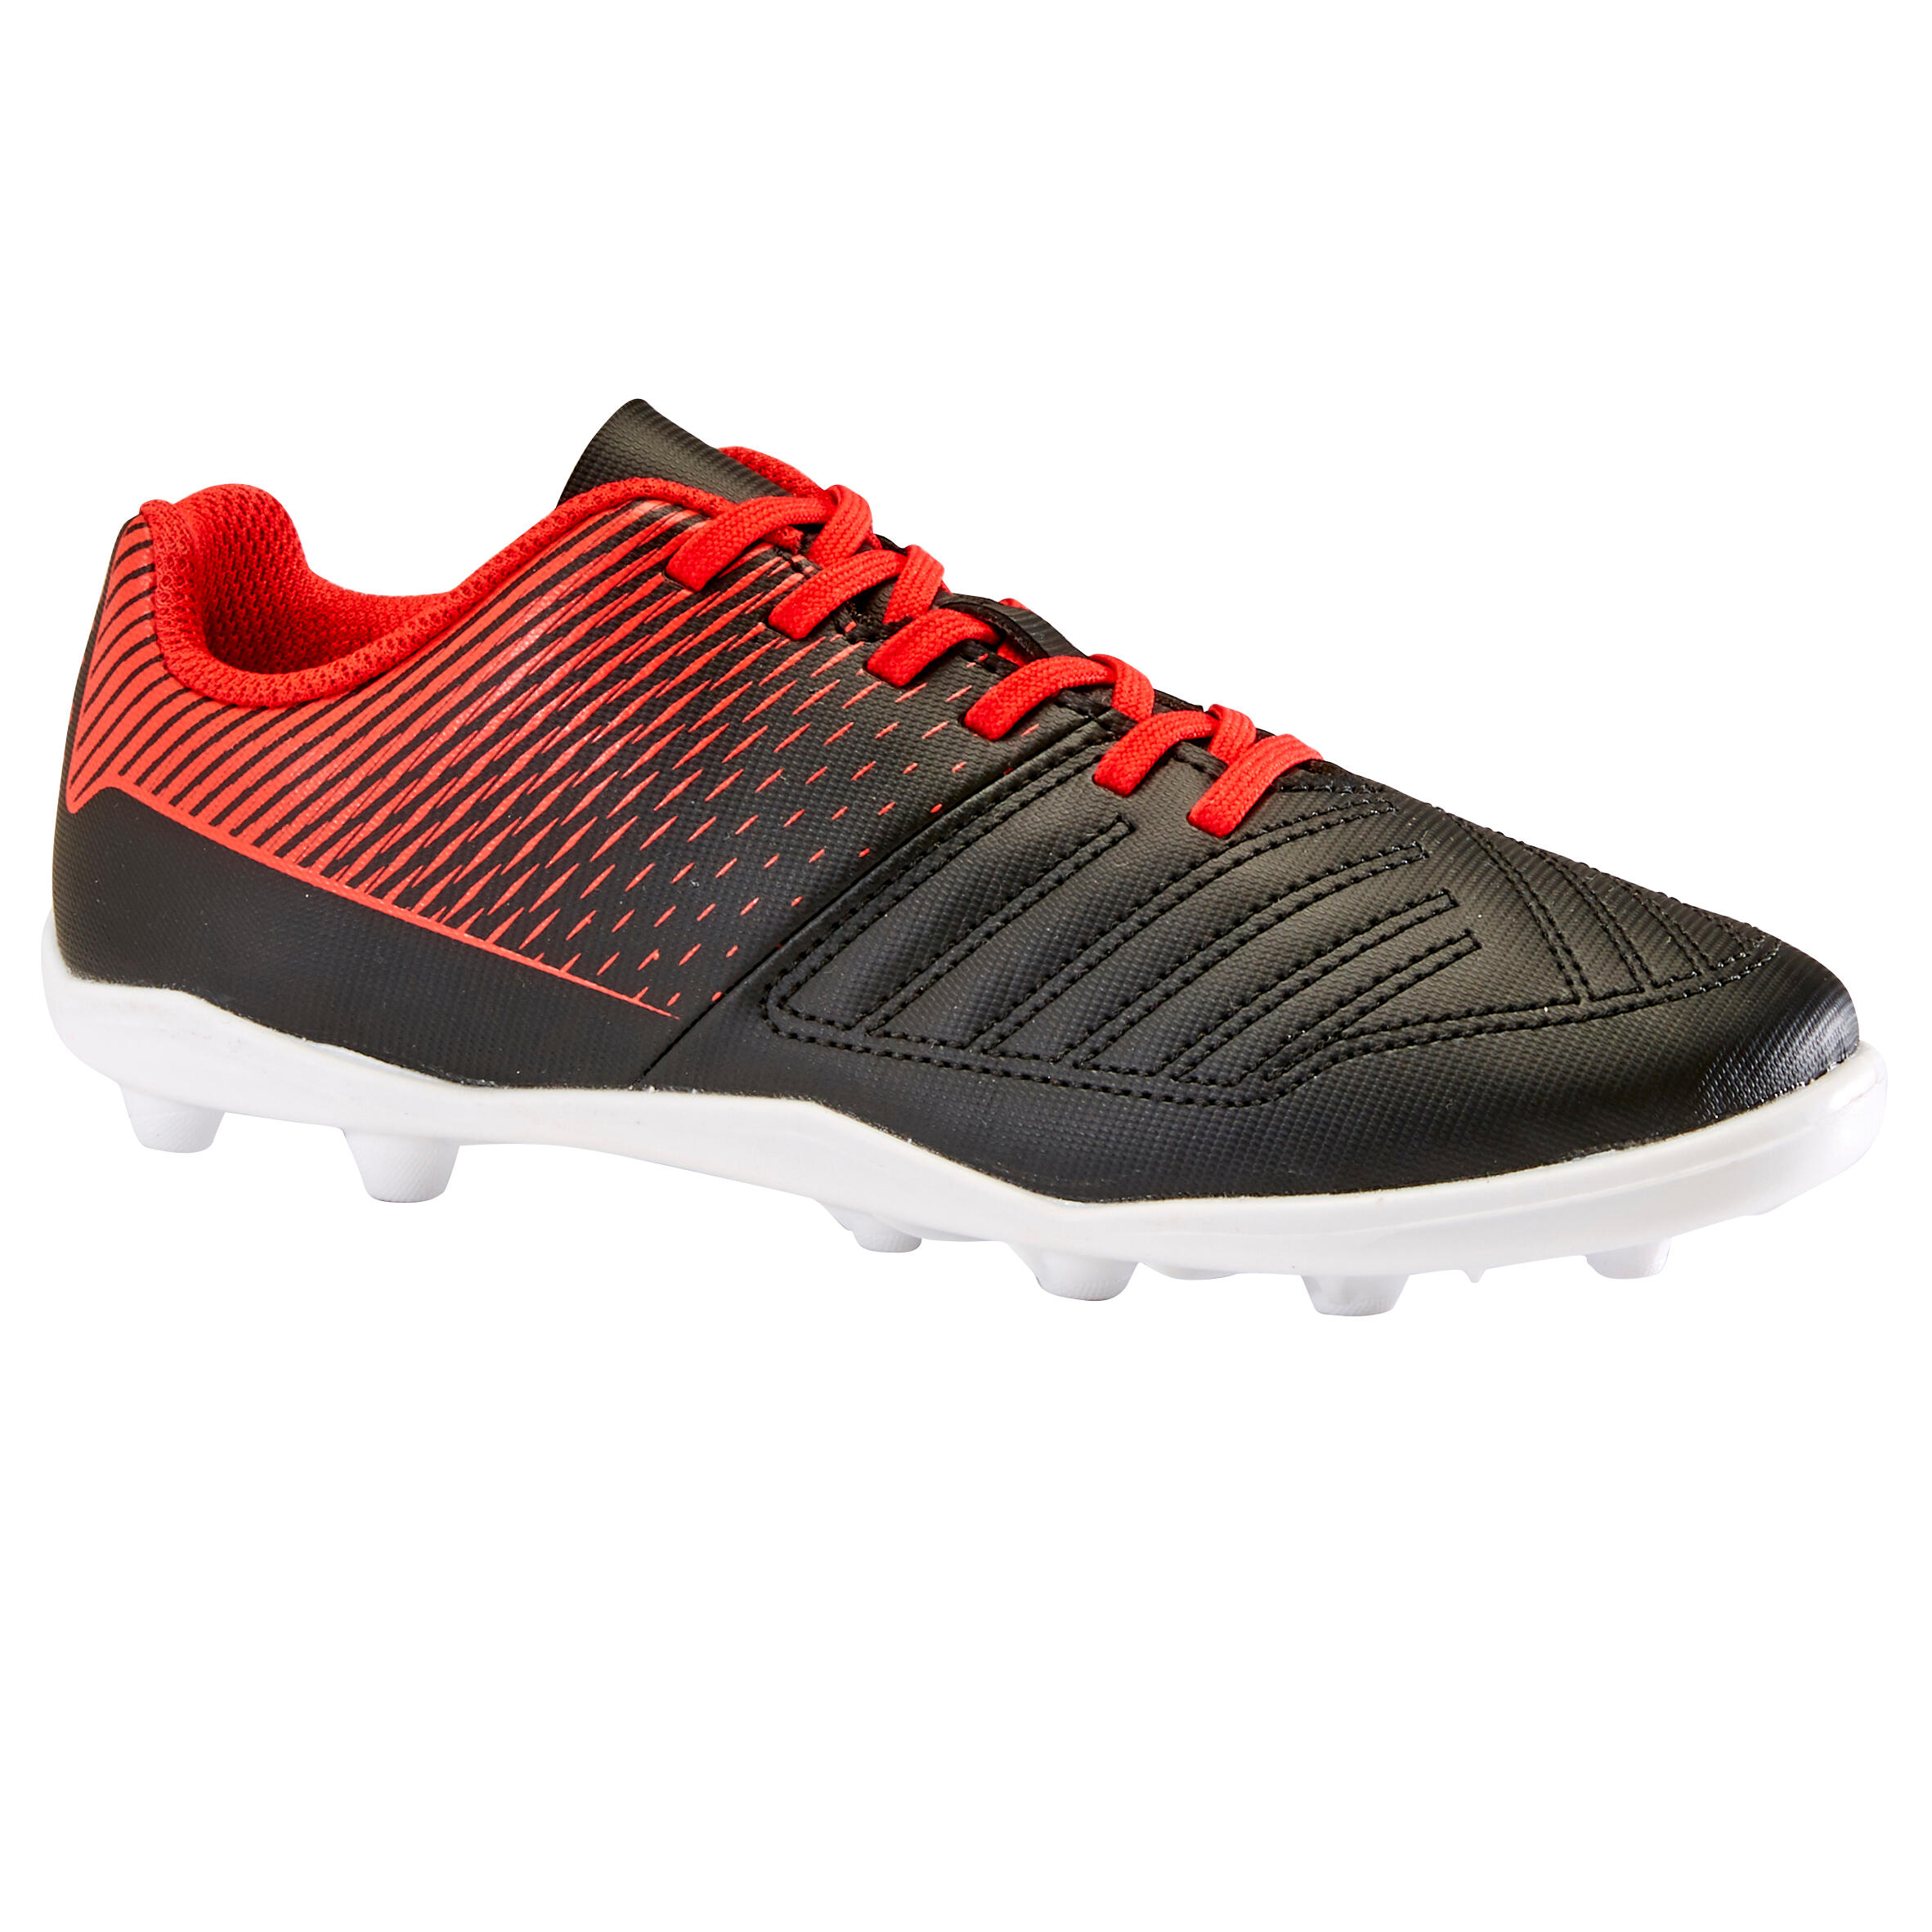 Kipsta Football Shoes - Football Boots 